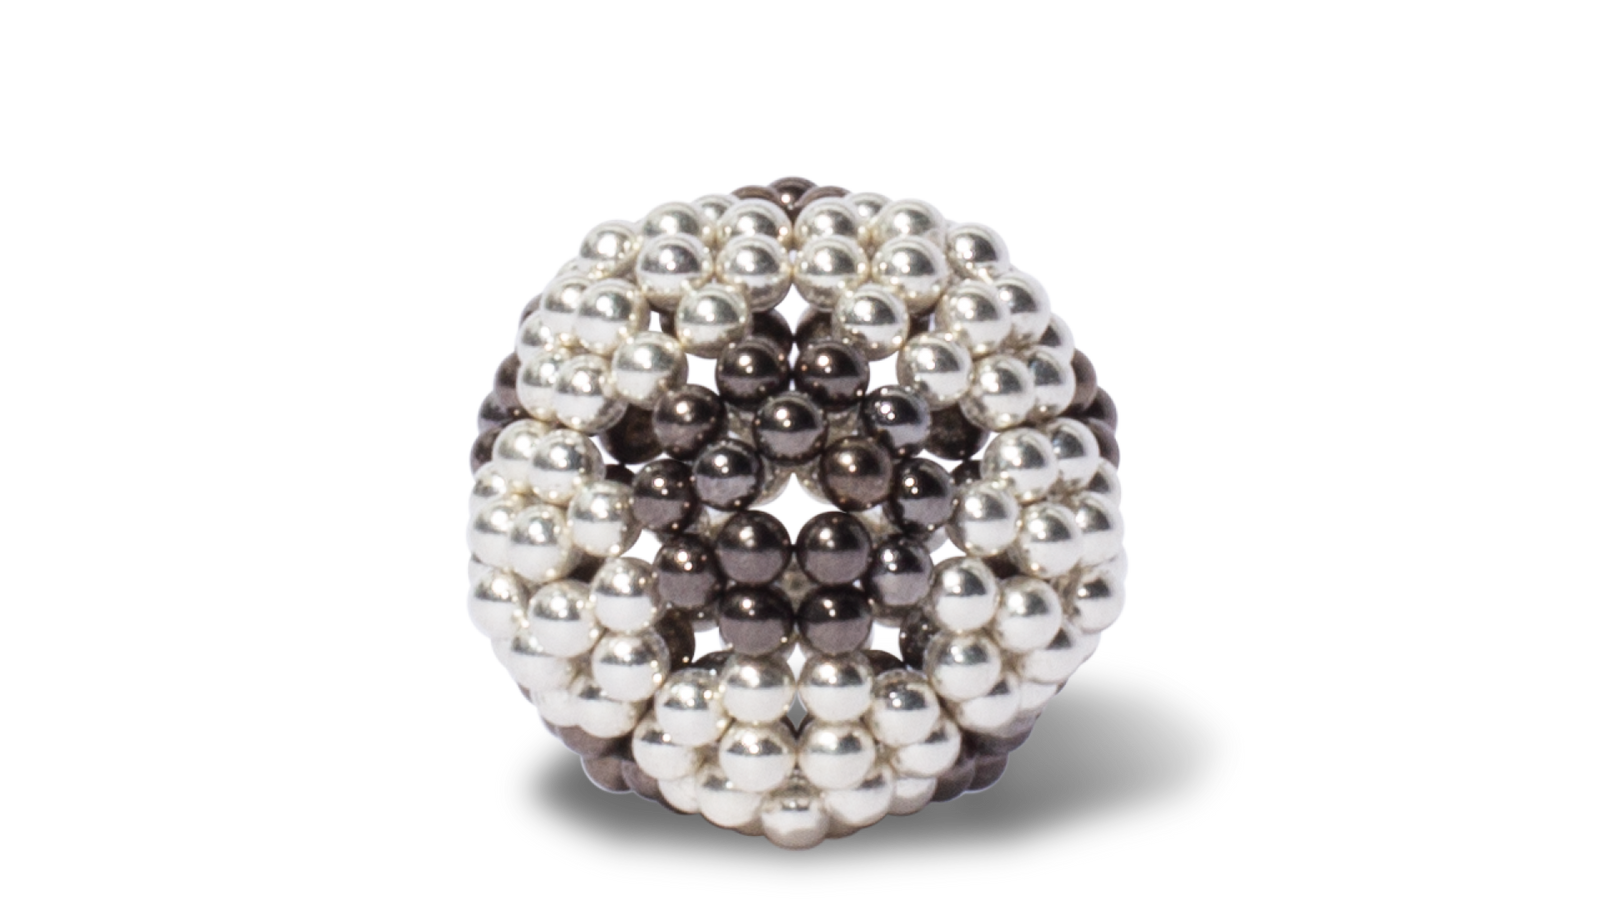 Magnet Sphere 120 Balls Mini Tutorial